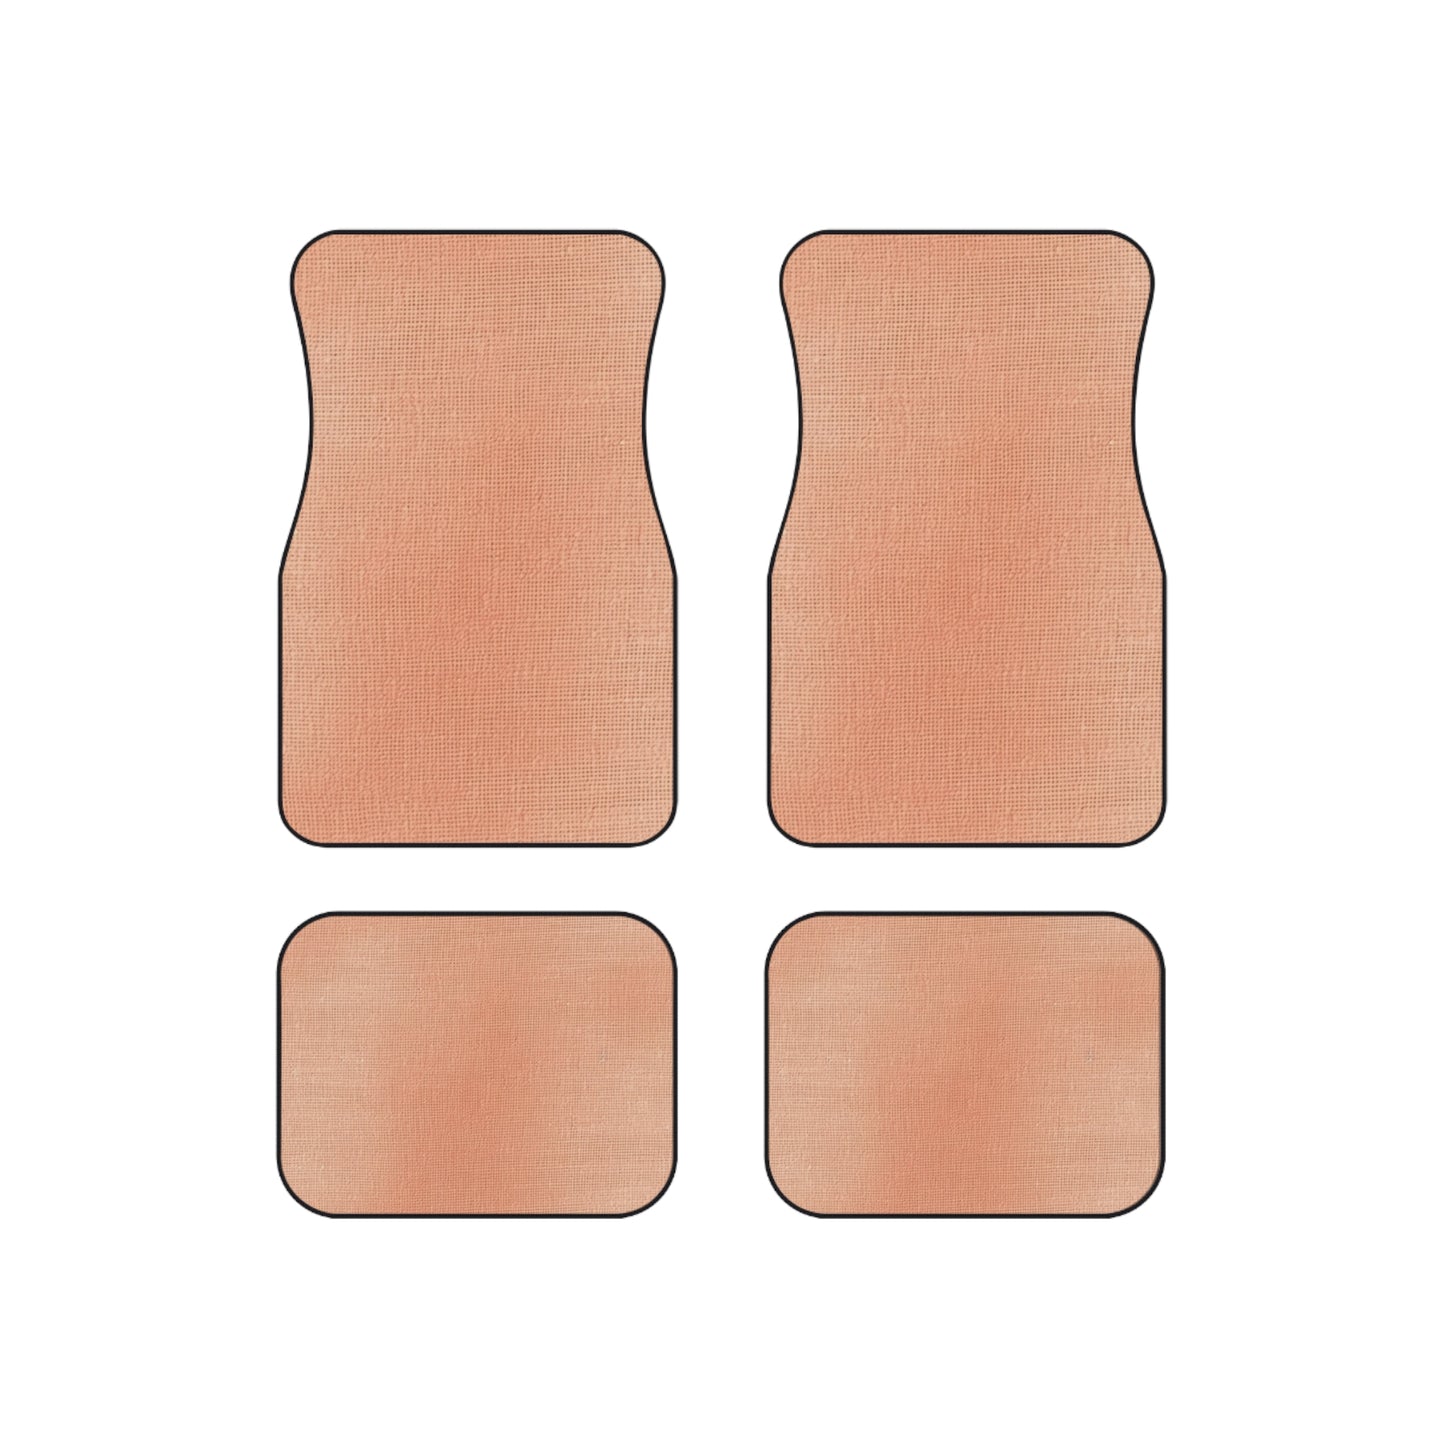 Soft Pink-Orange Peach: Denim-Inspired, Lush Fabric - Car Mats (Set of 4)